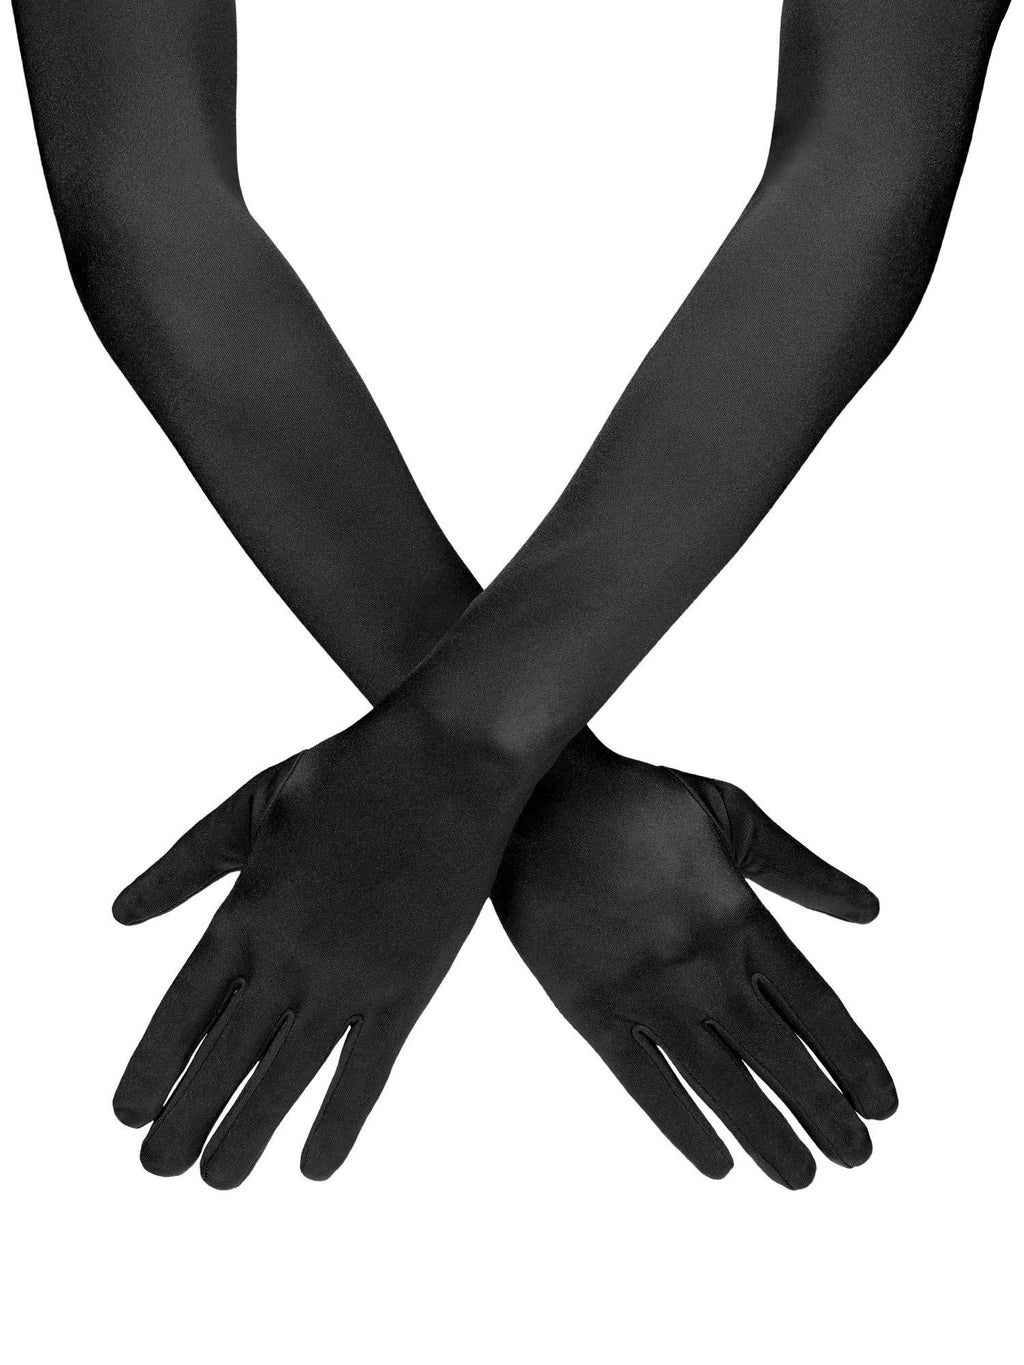 [Australia] - Opera Gloves 1920s Long Glove Classic Satin Elbow Length Gloves for Women, Adult Size (Black B) 